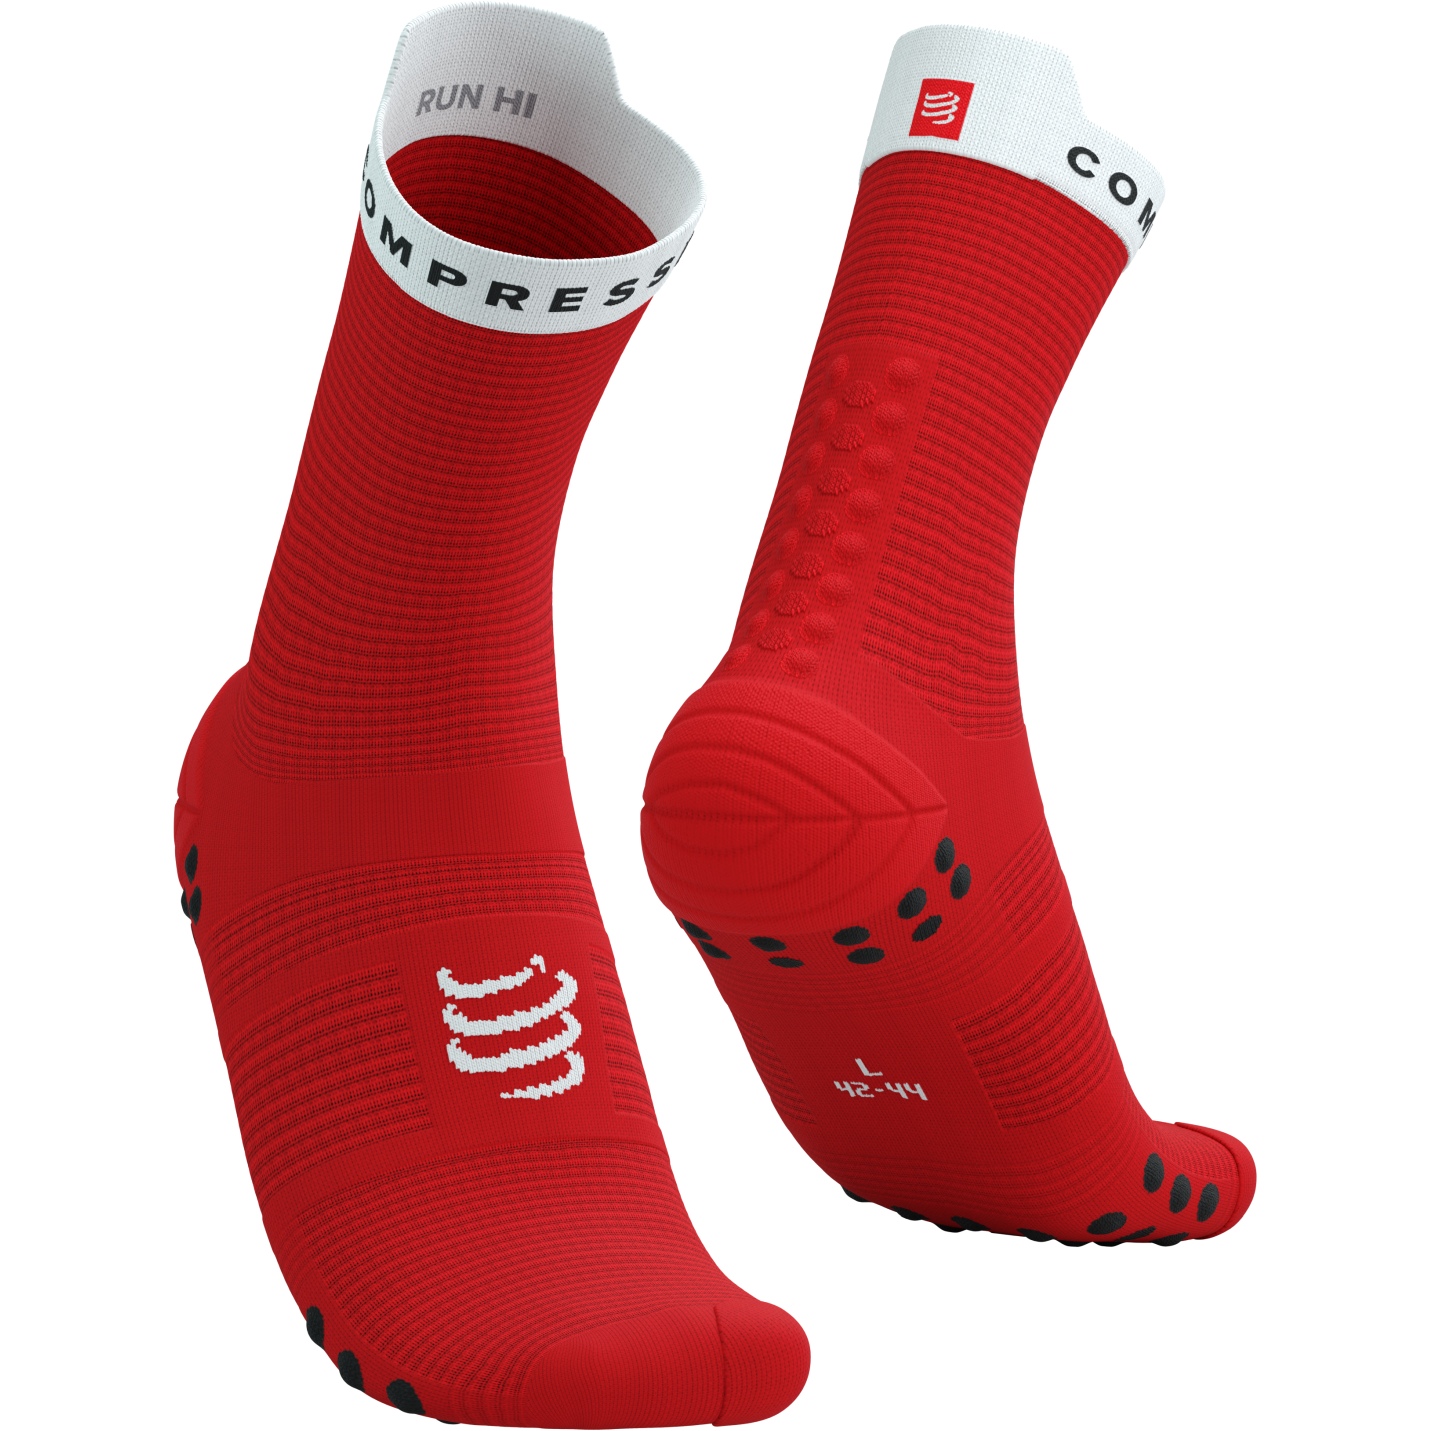 Picture of Compressport Pro Racing Compression Socks v4.0 Run High - core red/white/black